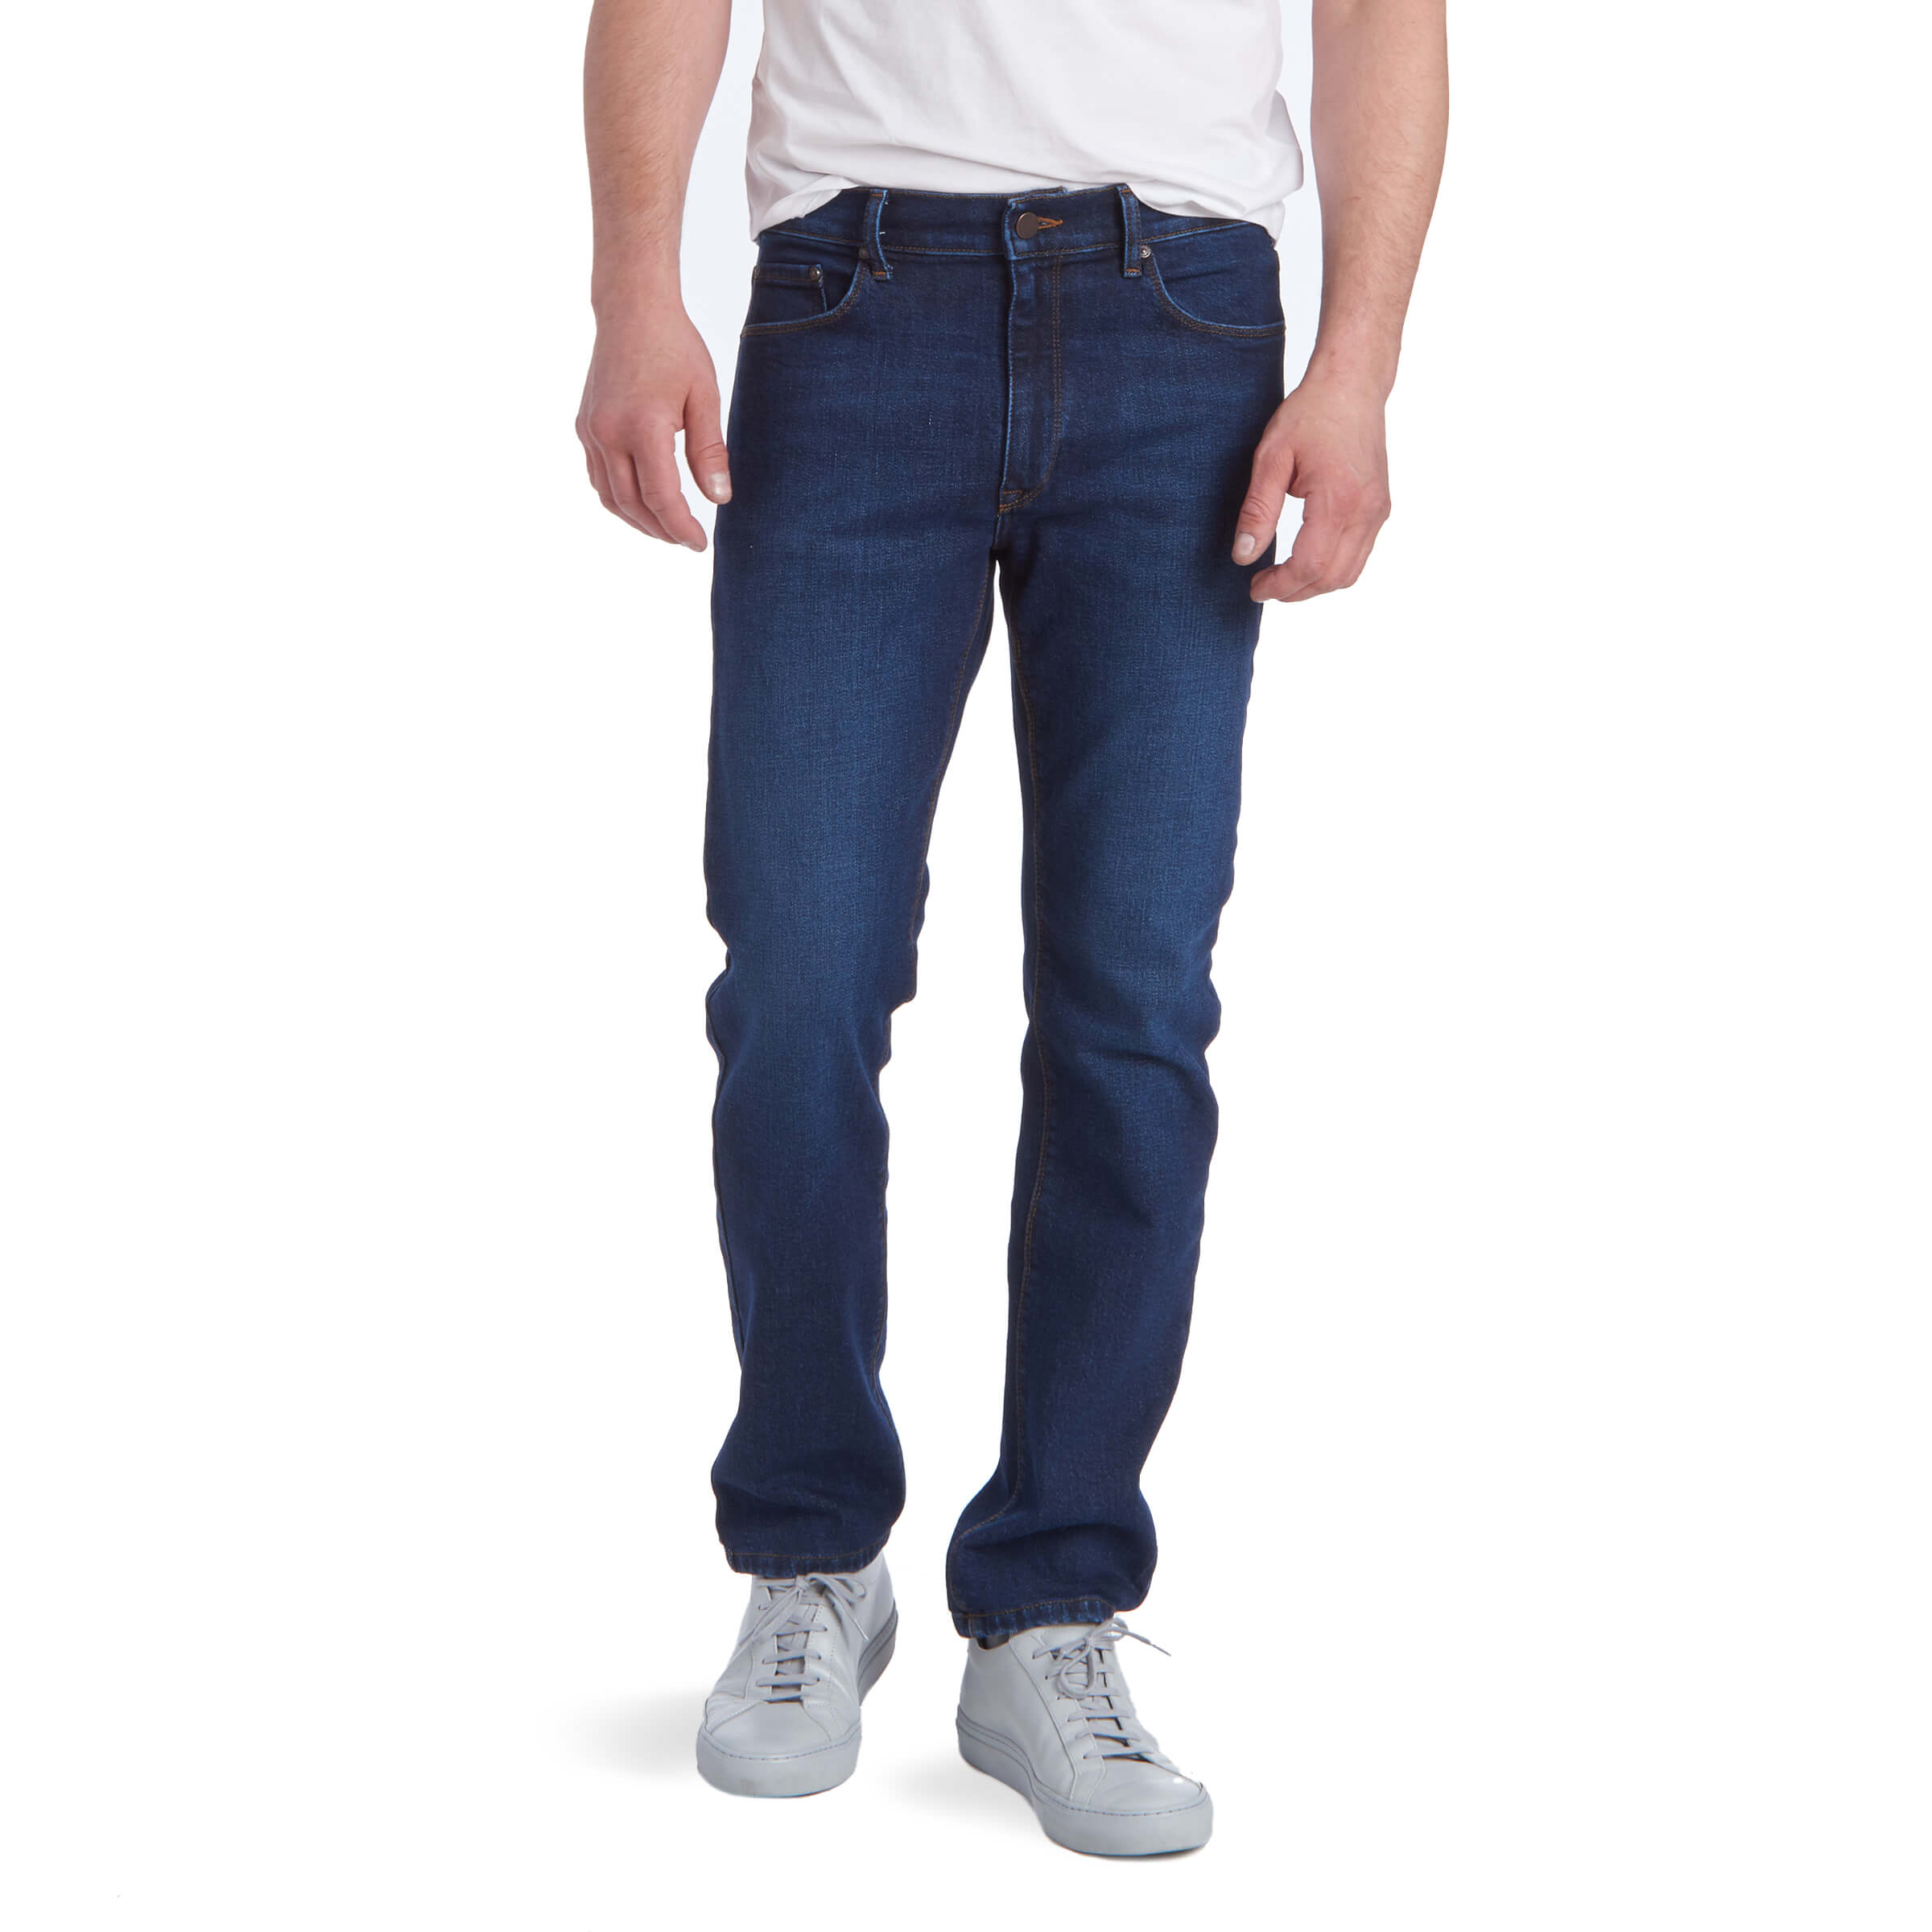 Men wearing Azul oscuro/medio Slim Grand Jeans